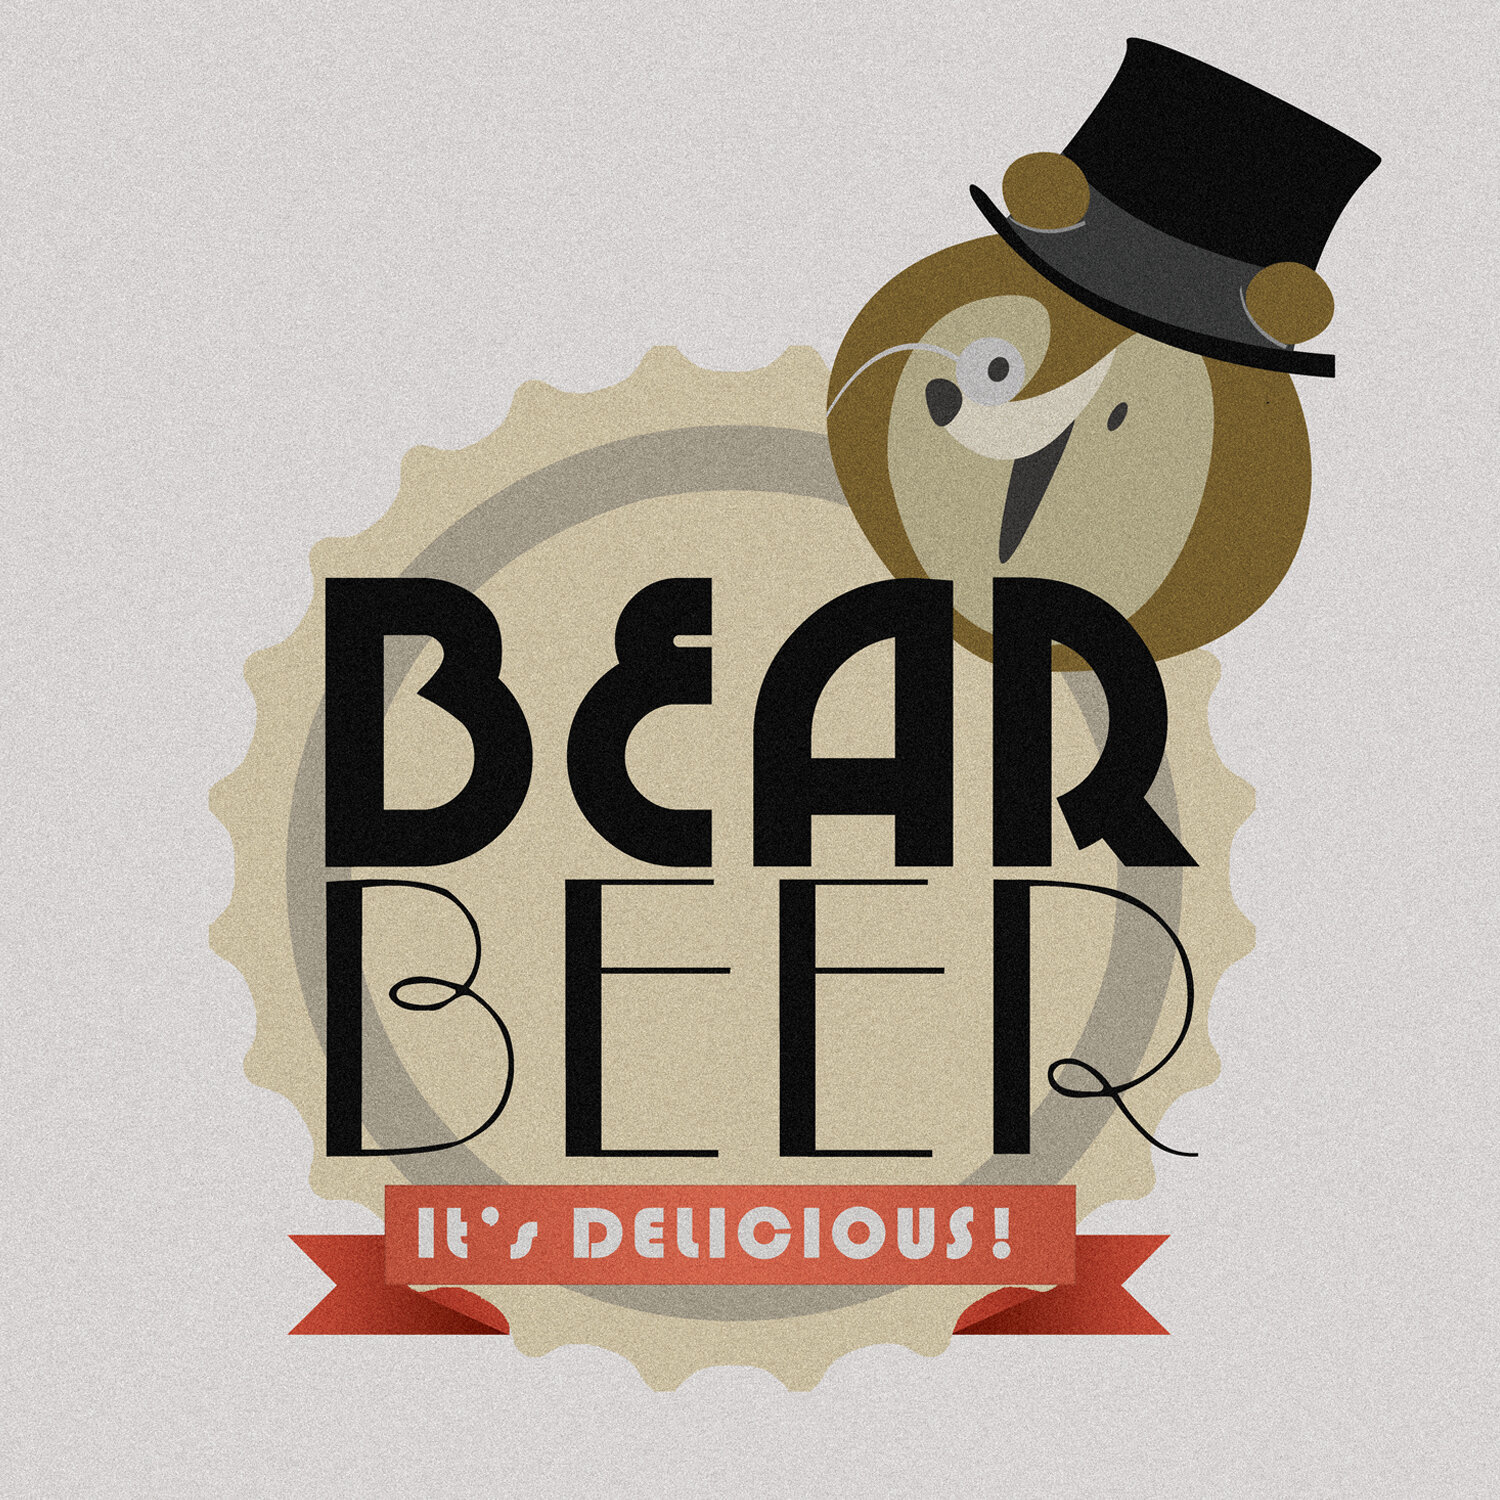 BEAR+BEER+LOGO.jpg